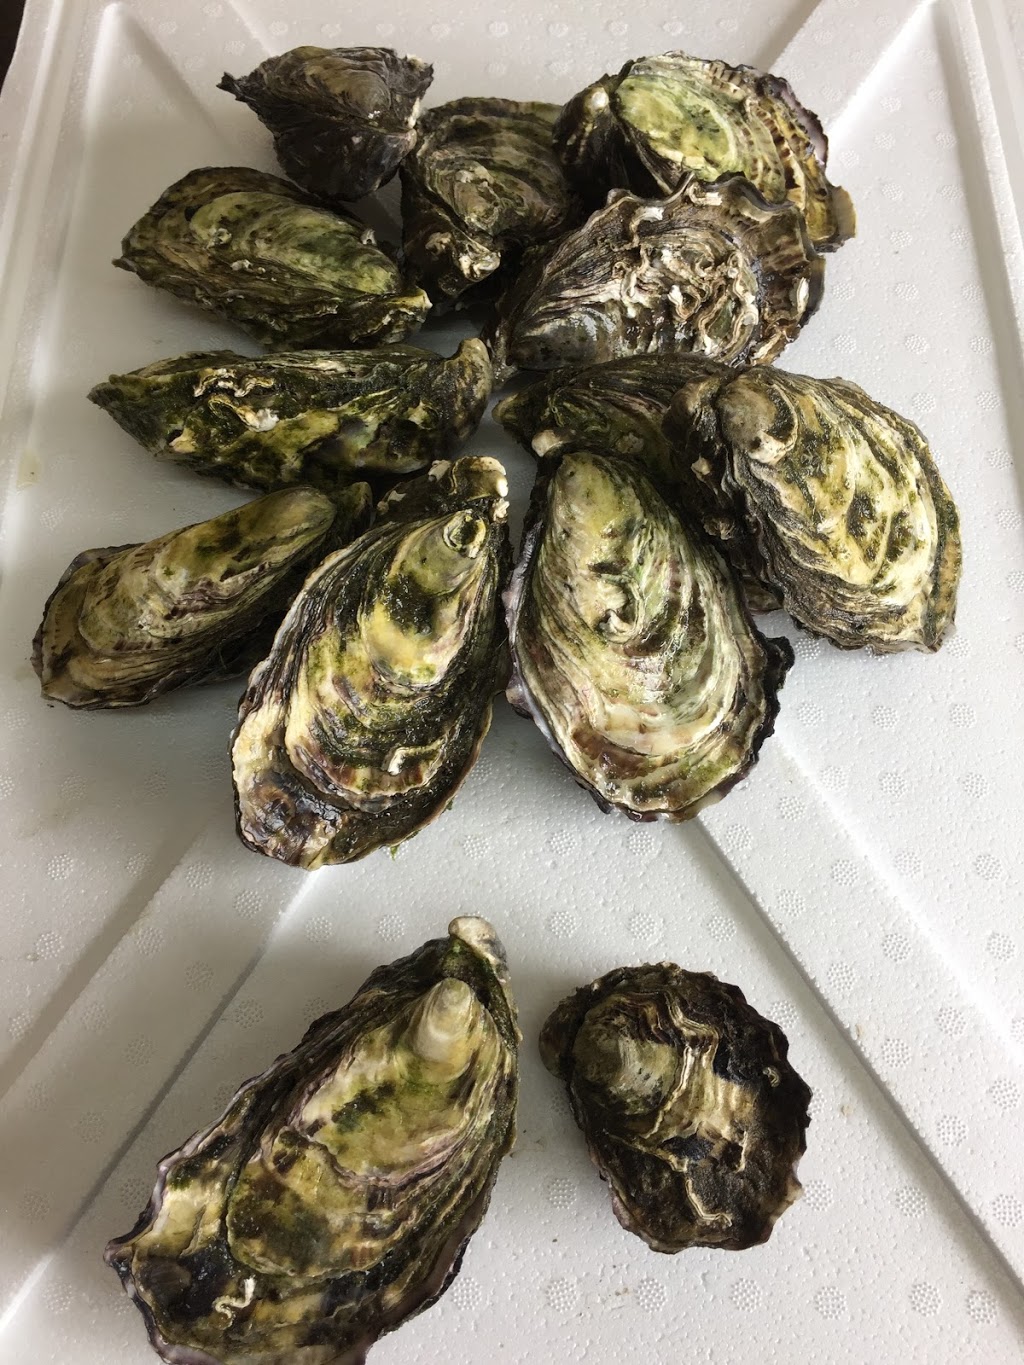 Tarkine Fresh Oysters | restaurant | 21/25 W Esplanade, Smithton TAS 7330, Australia | 0364522262 OR +61 3 6452 2262